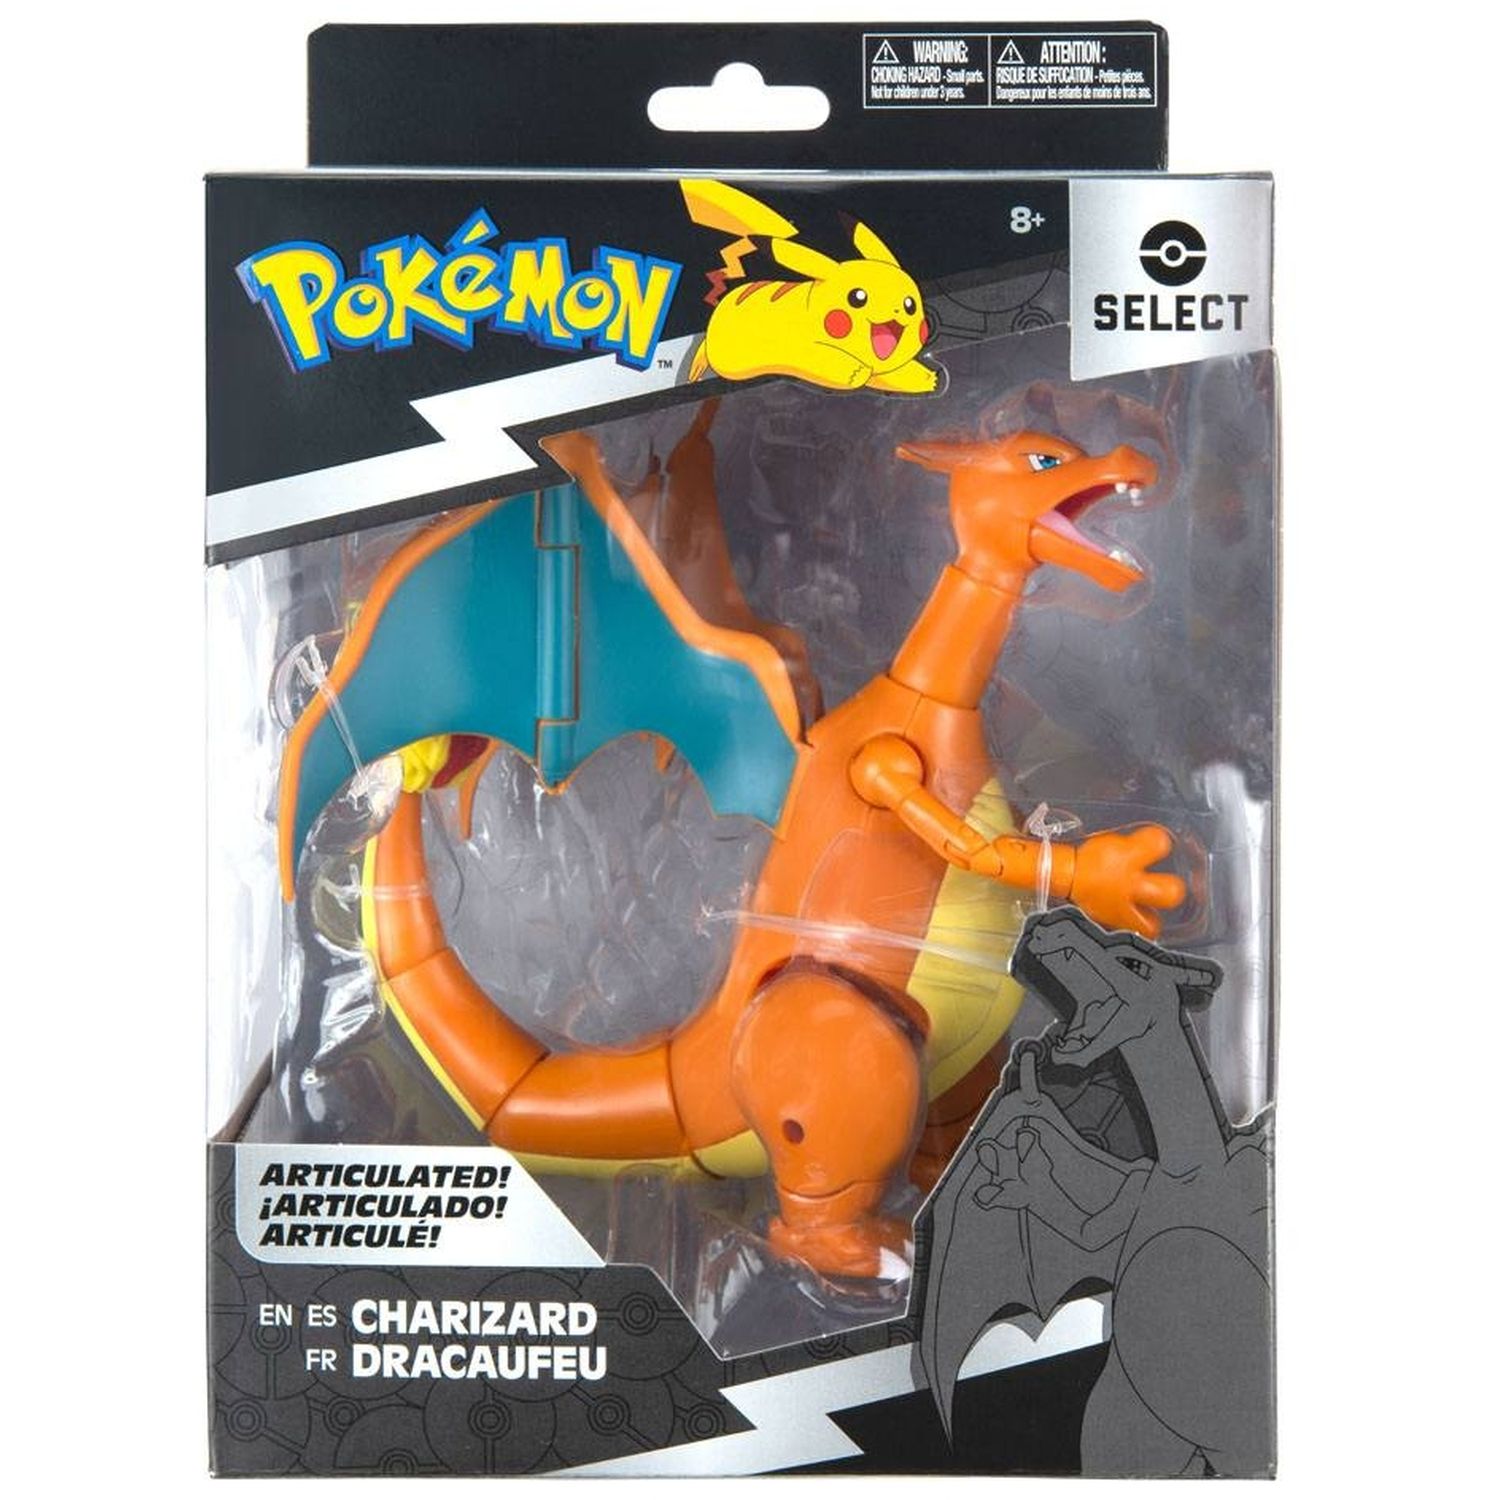 Mega Pokémon Coffret Dracaufeu : où l'acquérir